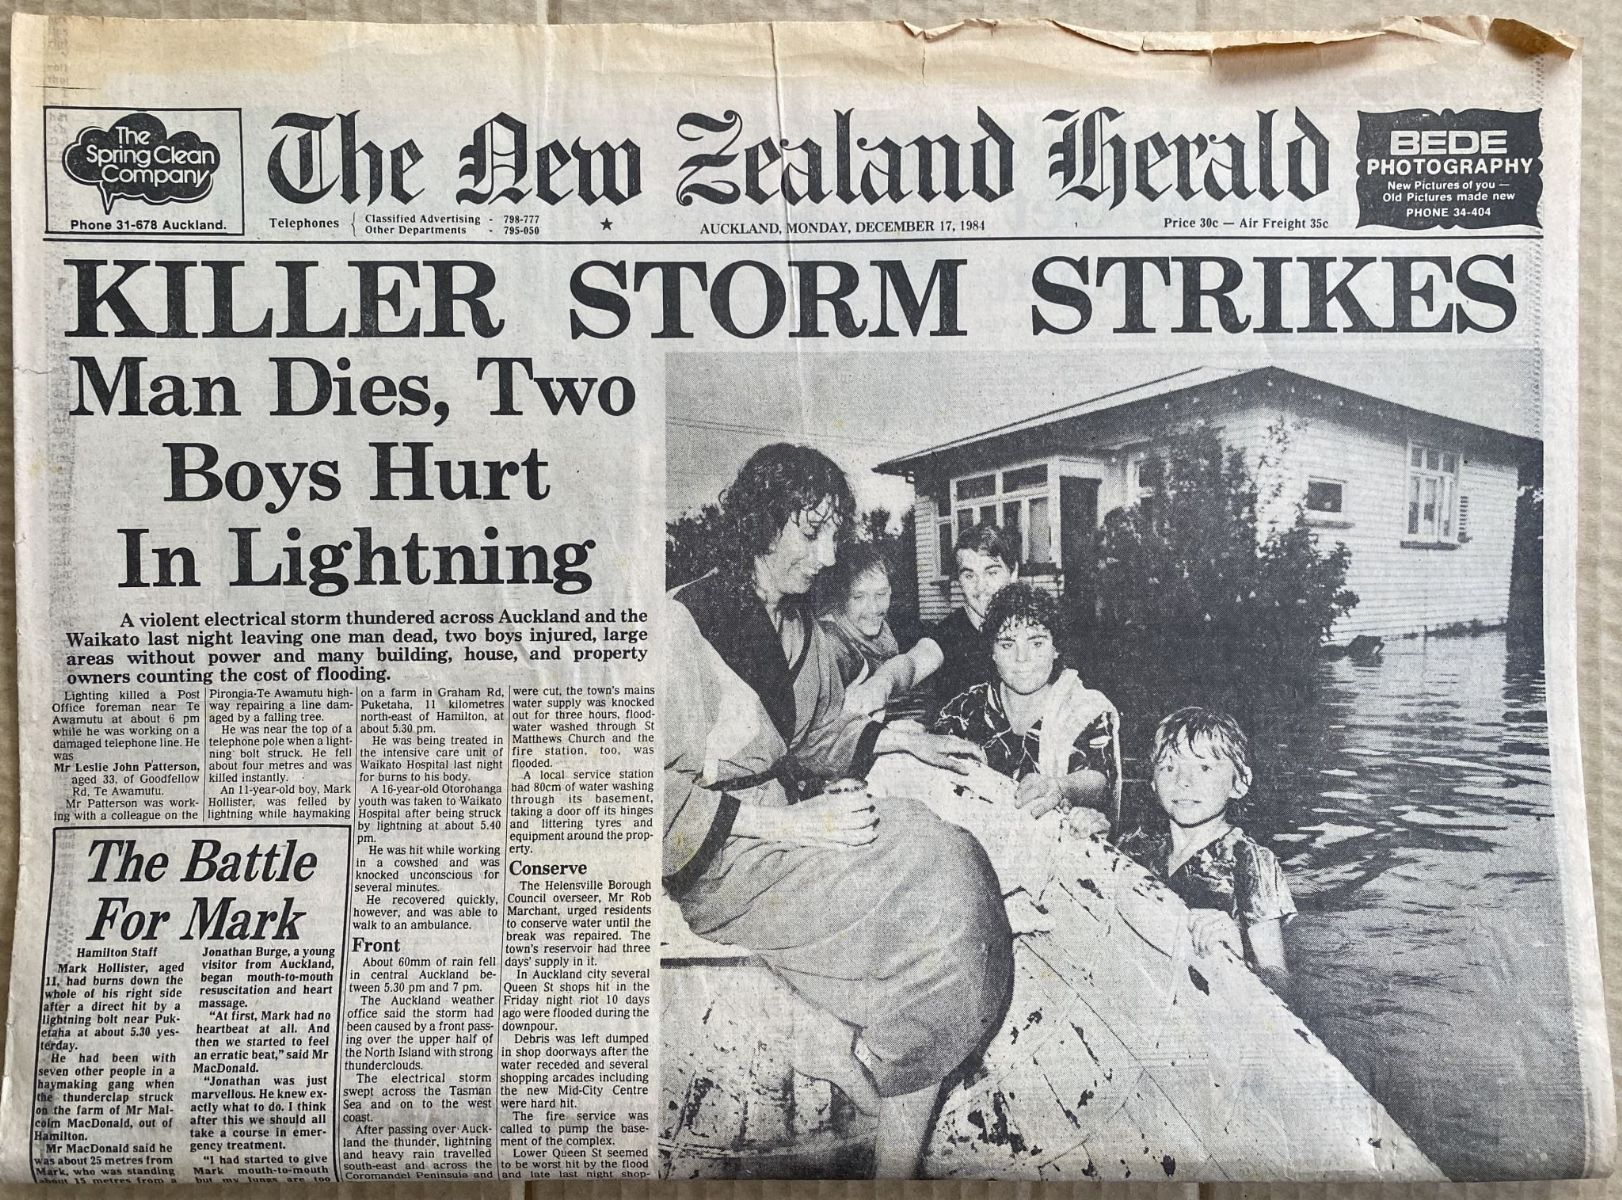 OLD NEWSPAPER: The New Zealand Herald, 17 December 1984 - Killer storm